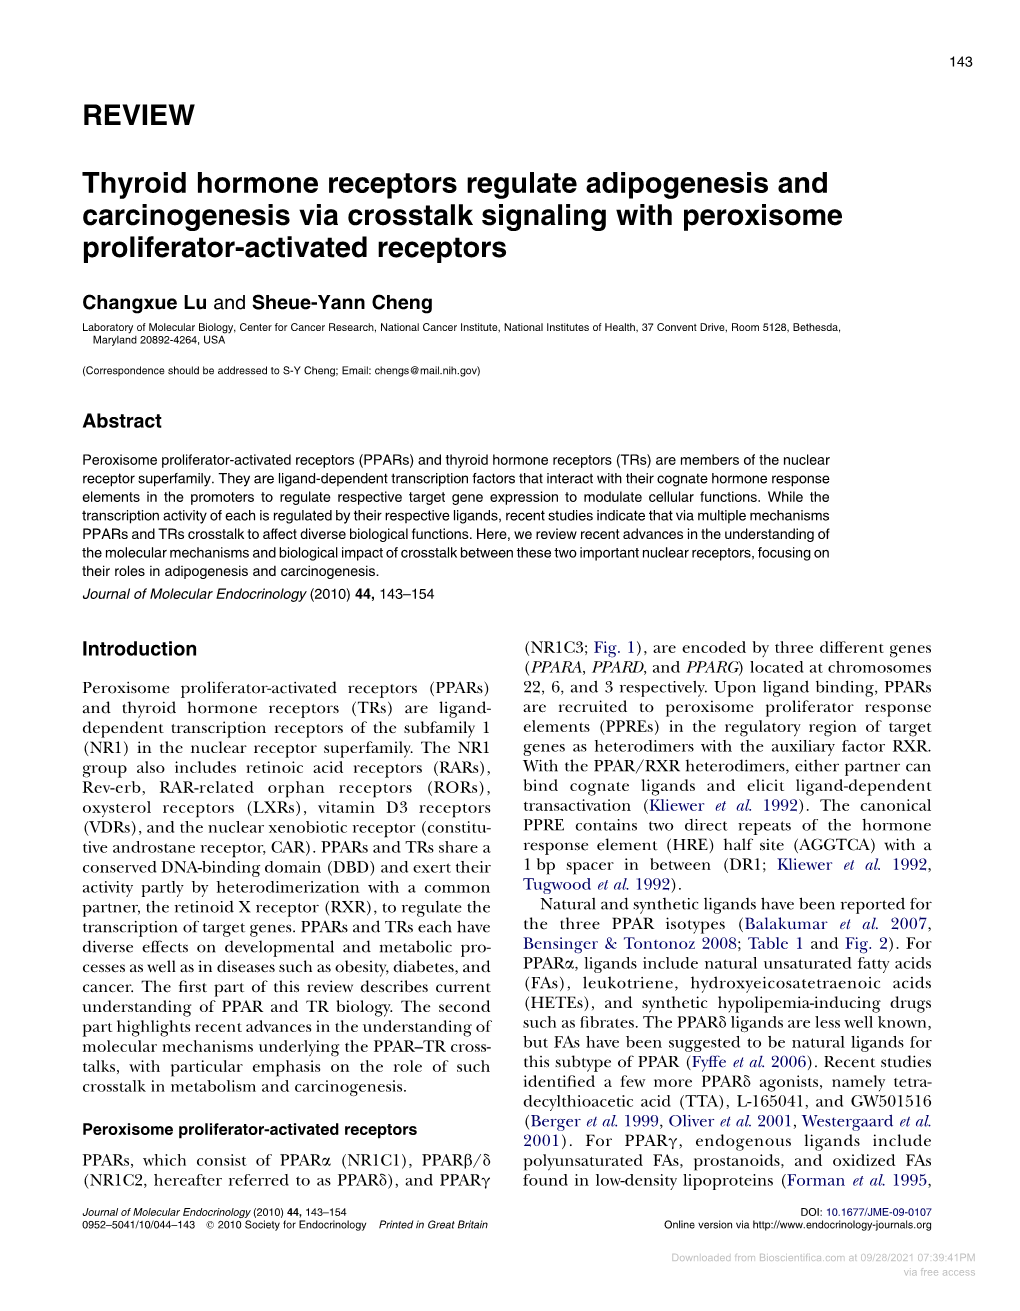 REVIEW Thyroid Hormone Receptors Regulate Adipogenesis and Carcinogenesis Via Crosstalk Signaling with Peroxisome Proliferator-A